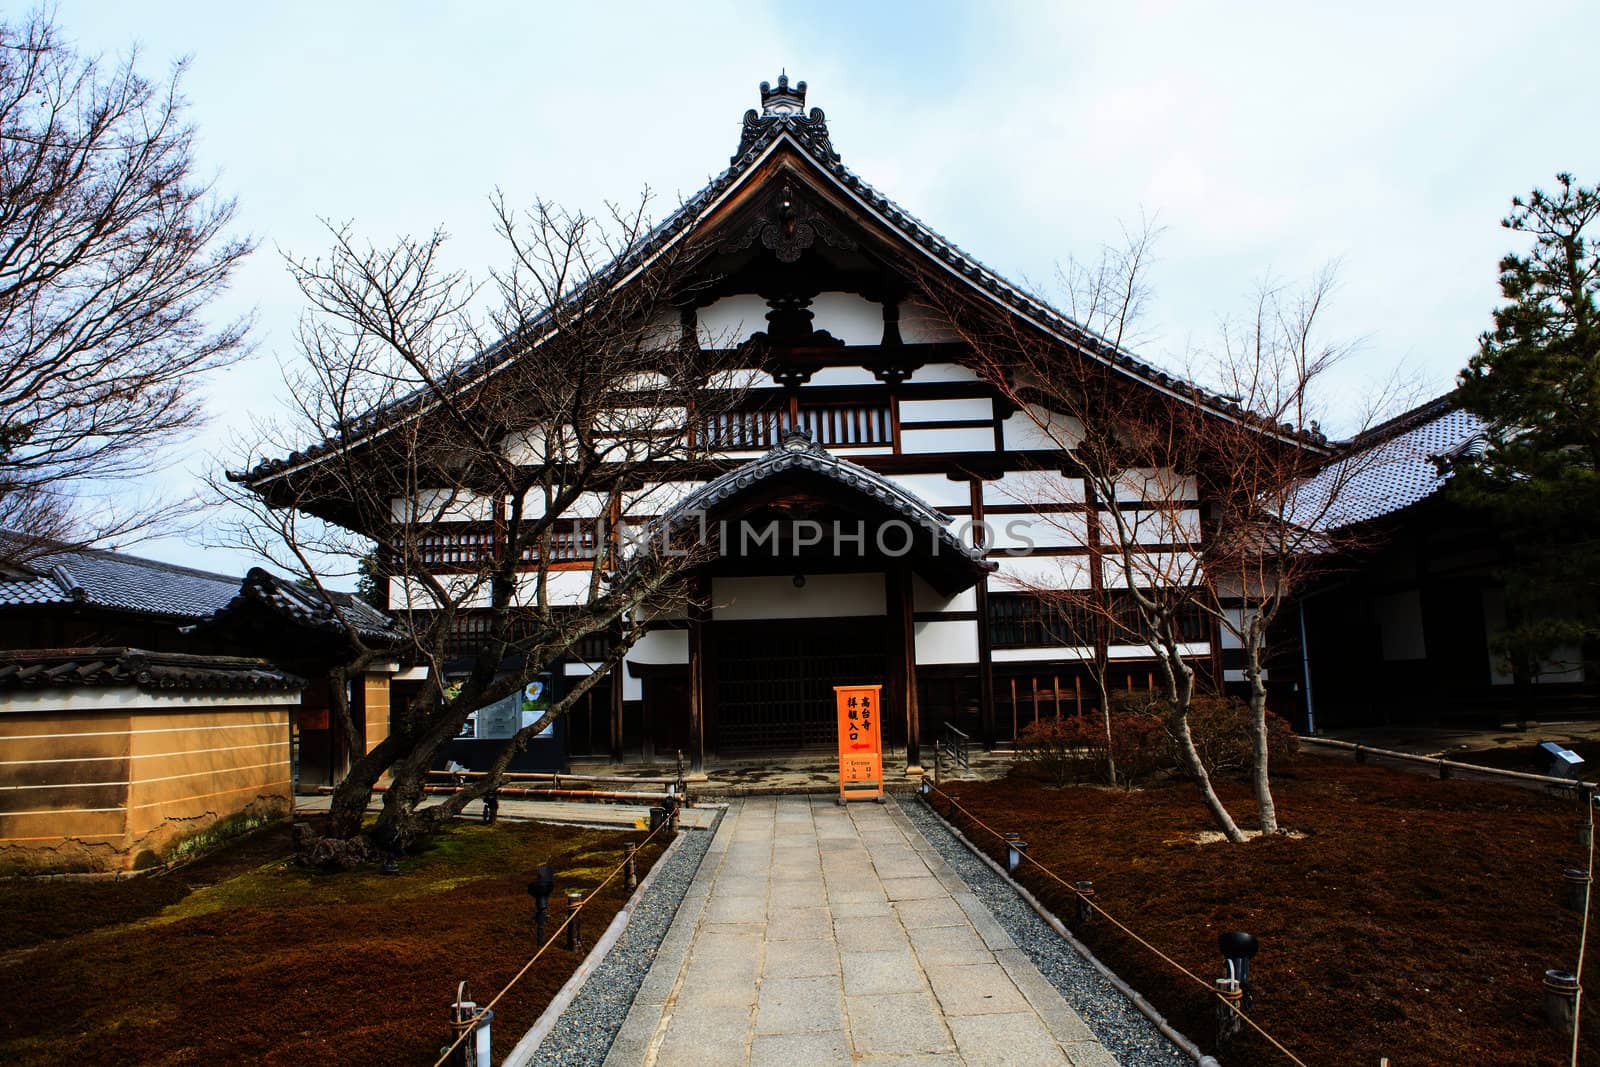  Kodai-ji temple by thanomphong